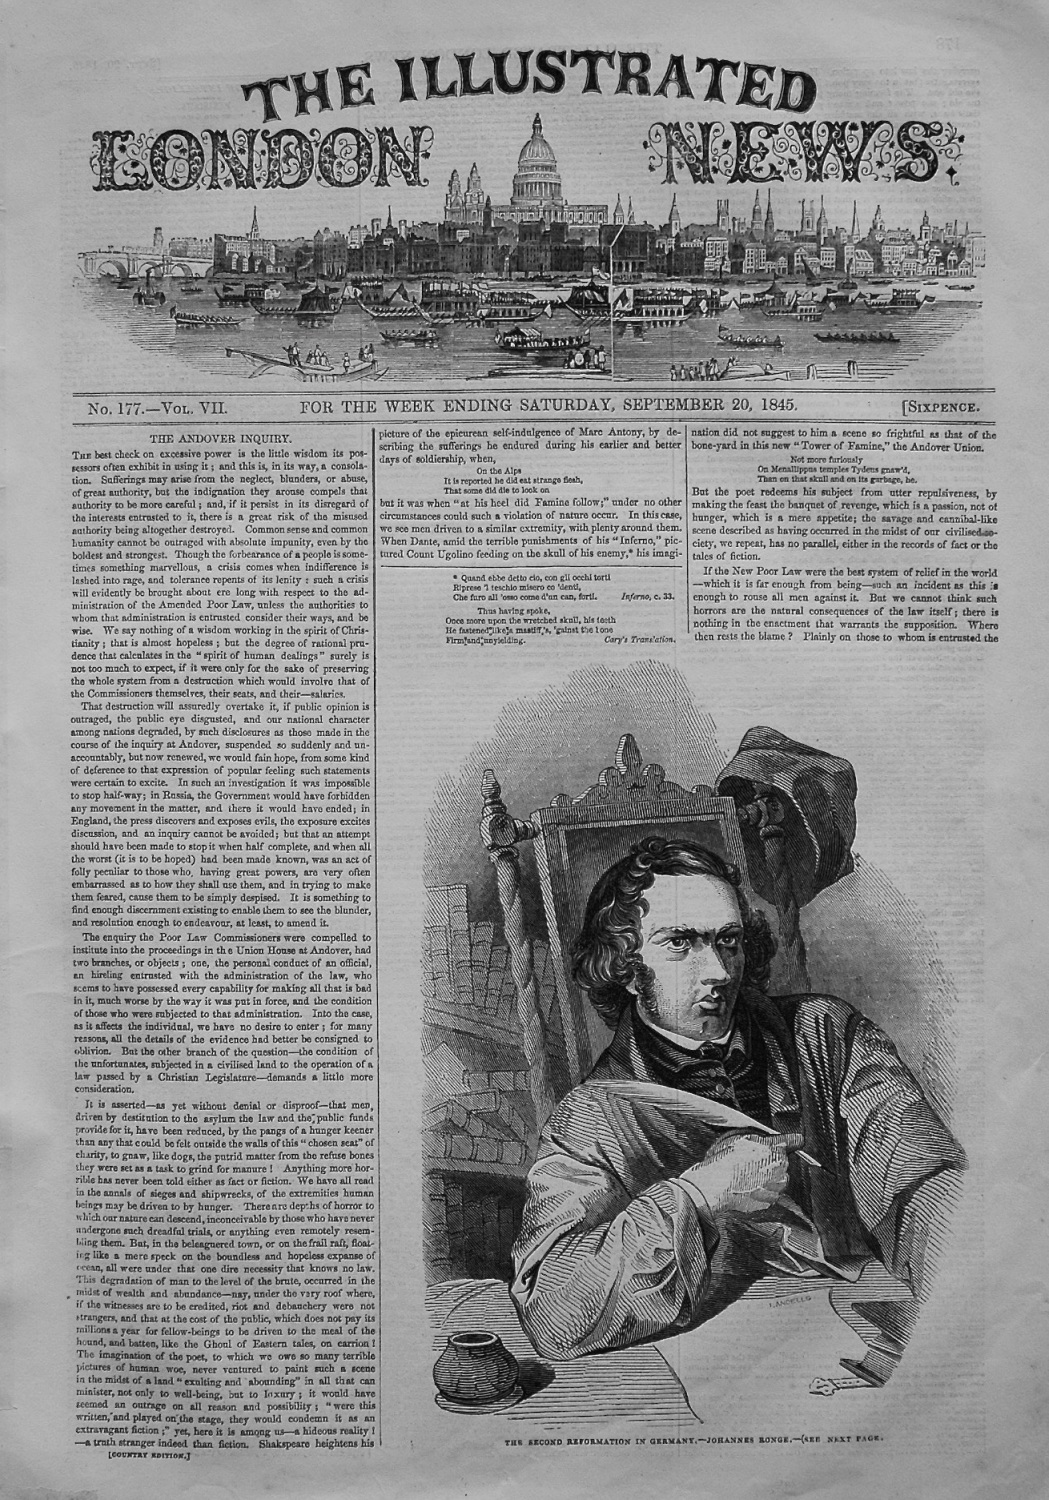 Illustrated London News. September 20th, 1845.